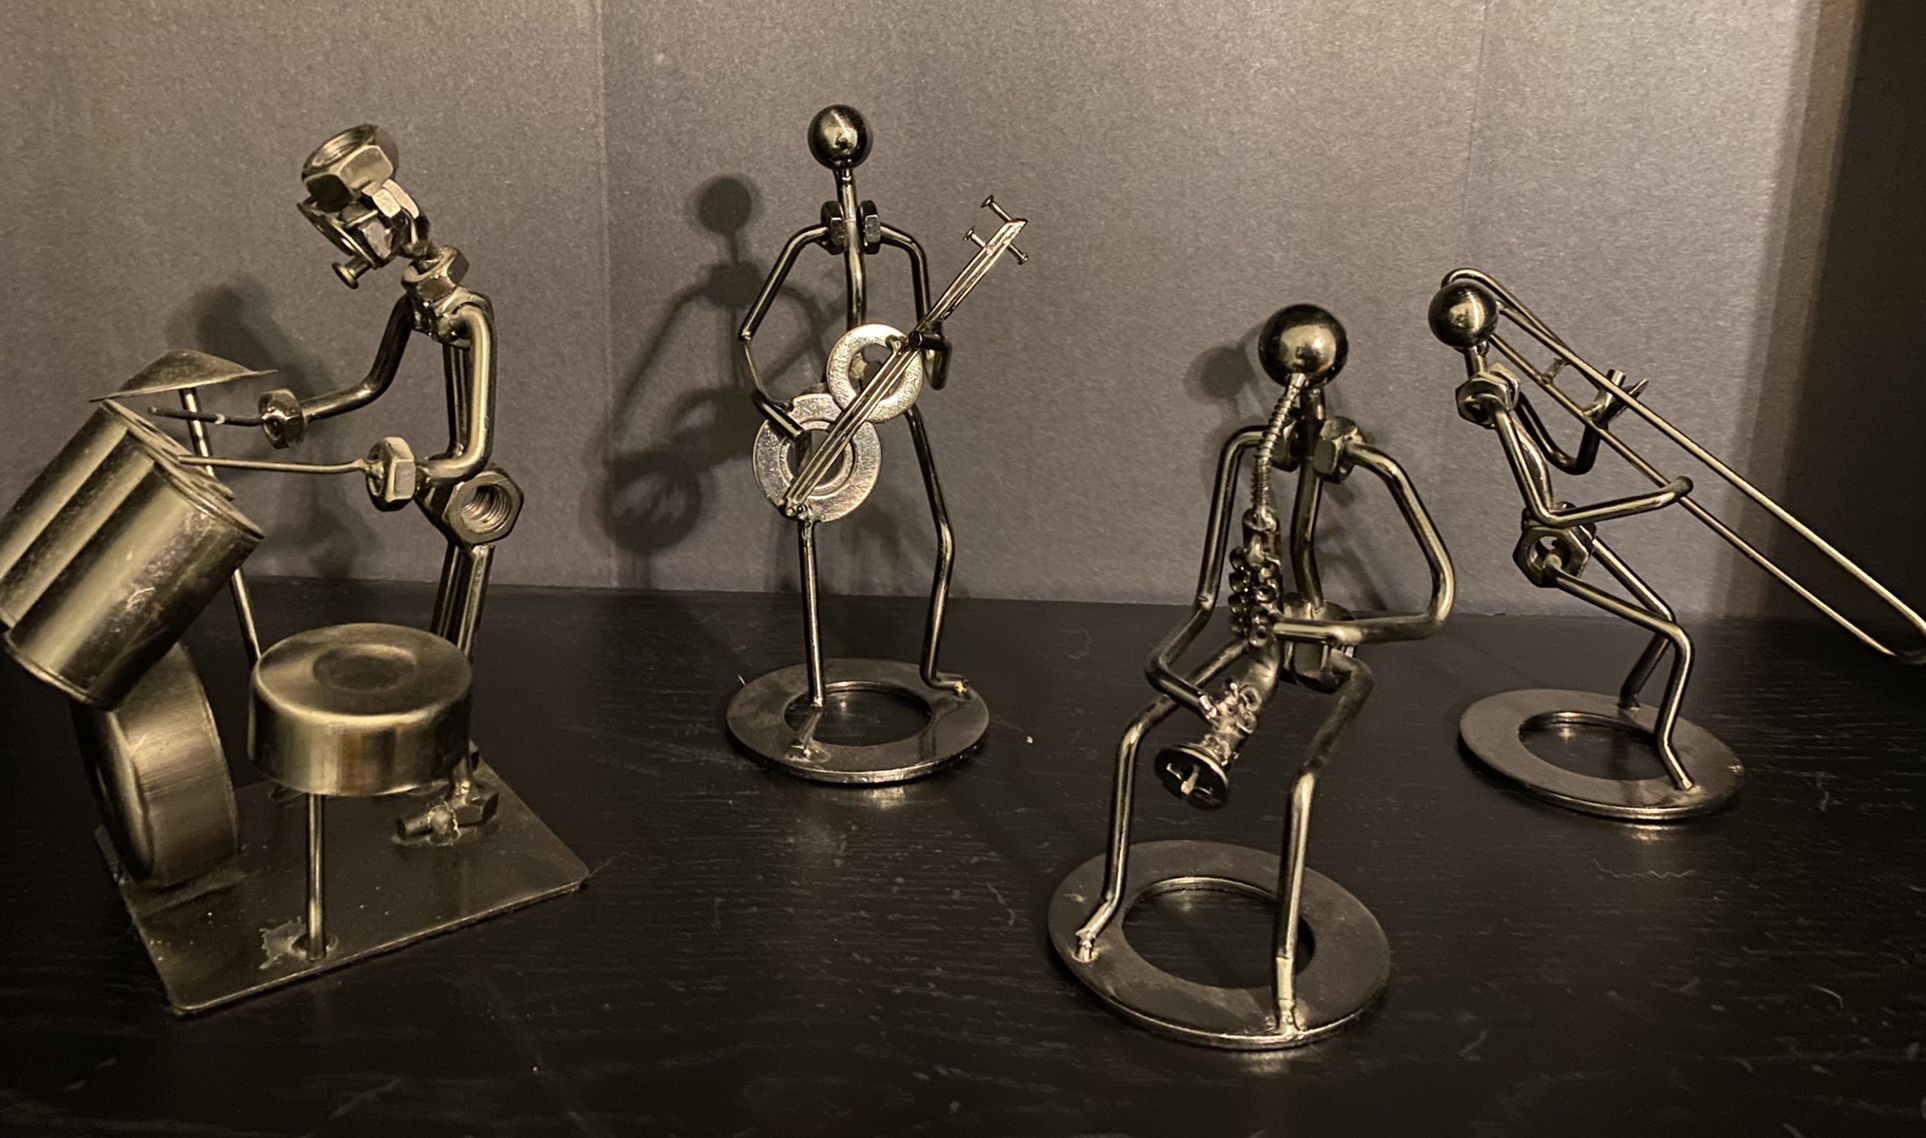 Metal Figurines